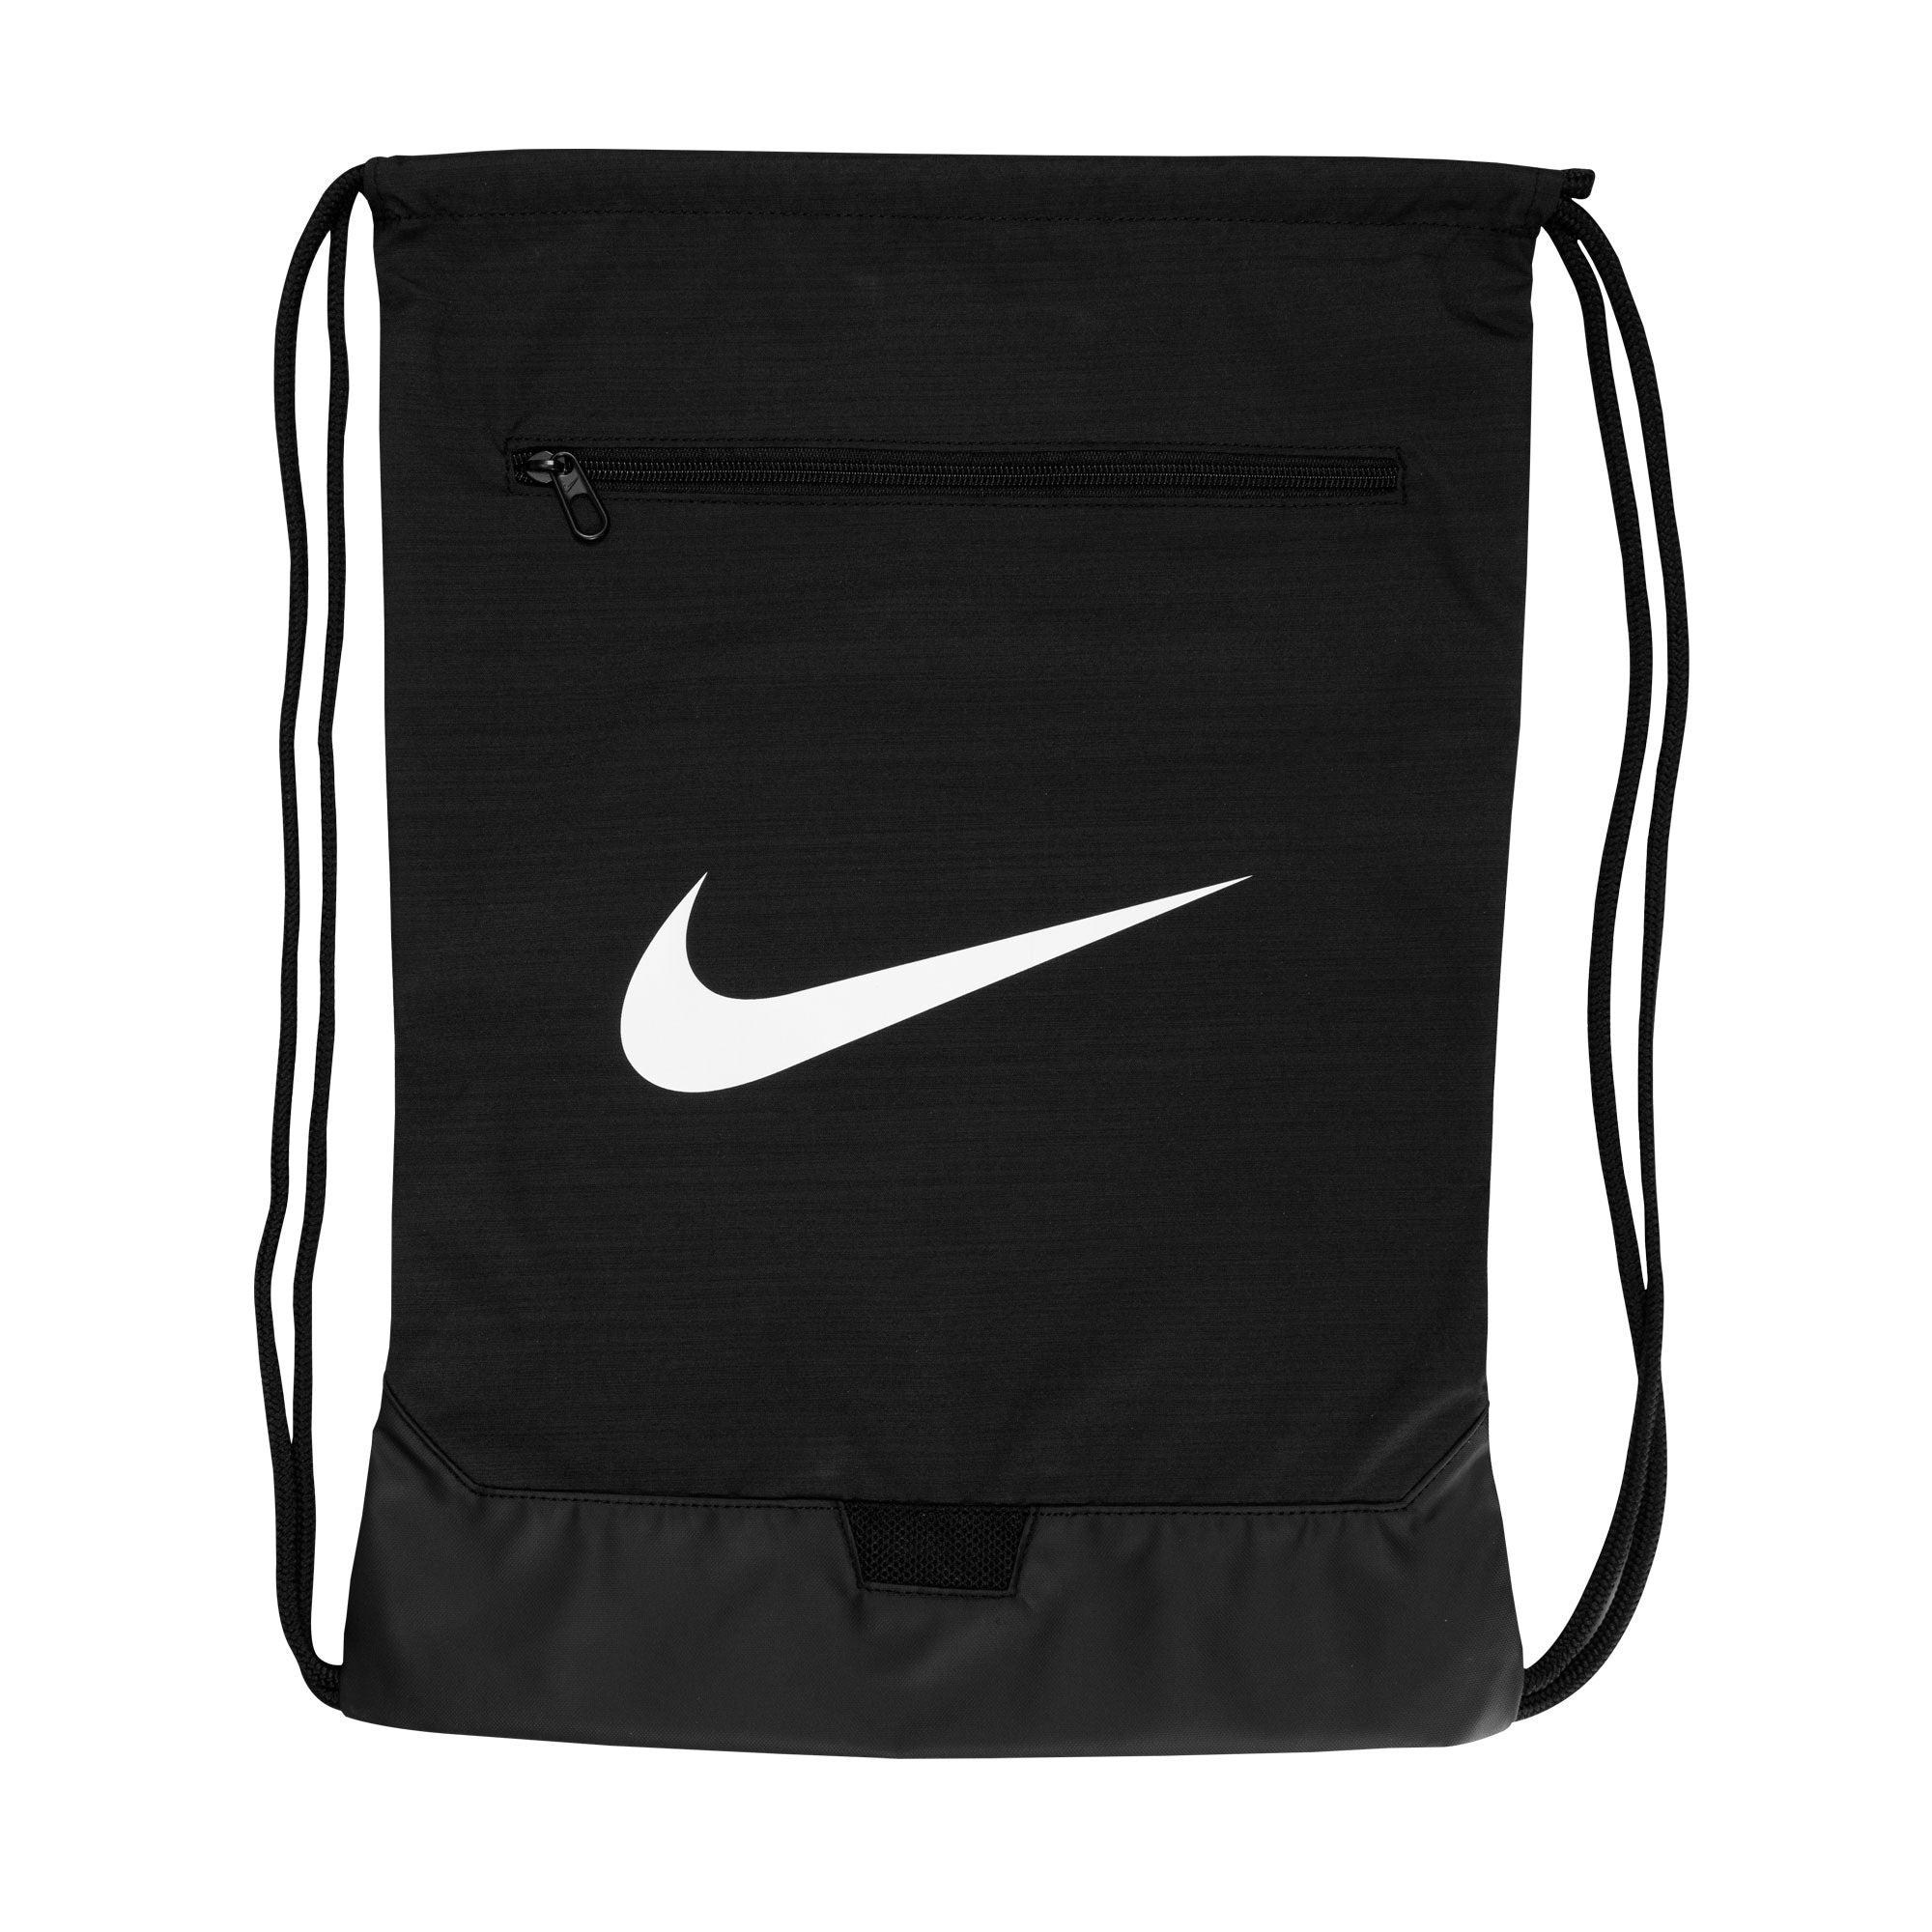 Angel City FC Nike Drawstring Bag